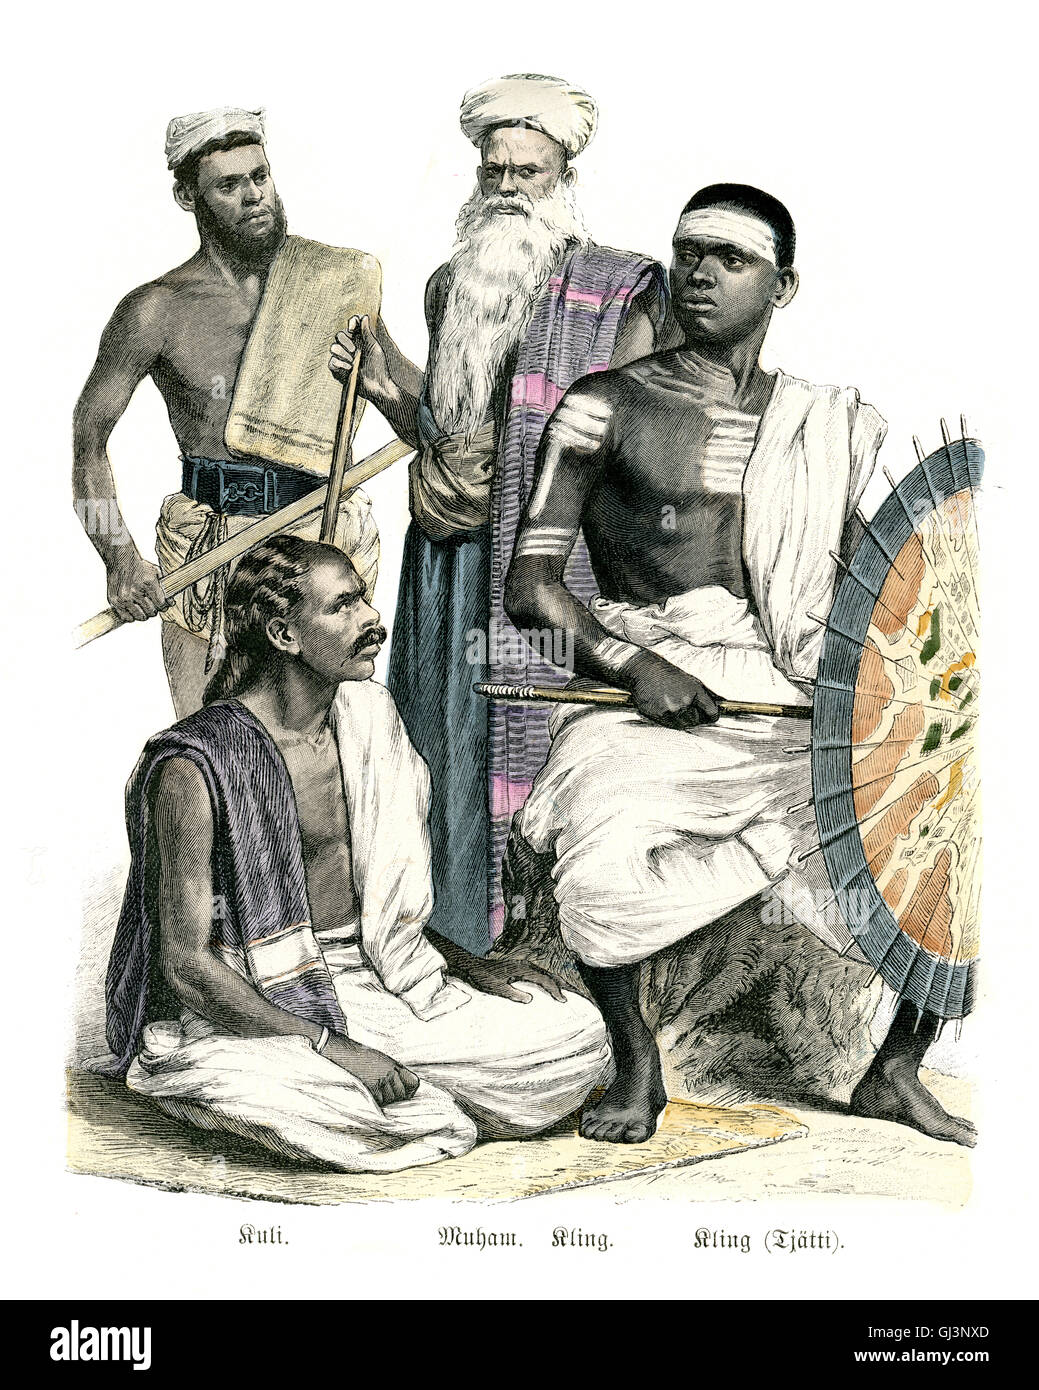 Costumes of East India, 19th Century. Coolie, Muhammedian Kling, Keling of Tjatti Stock Photo